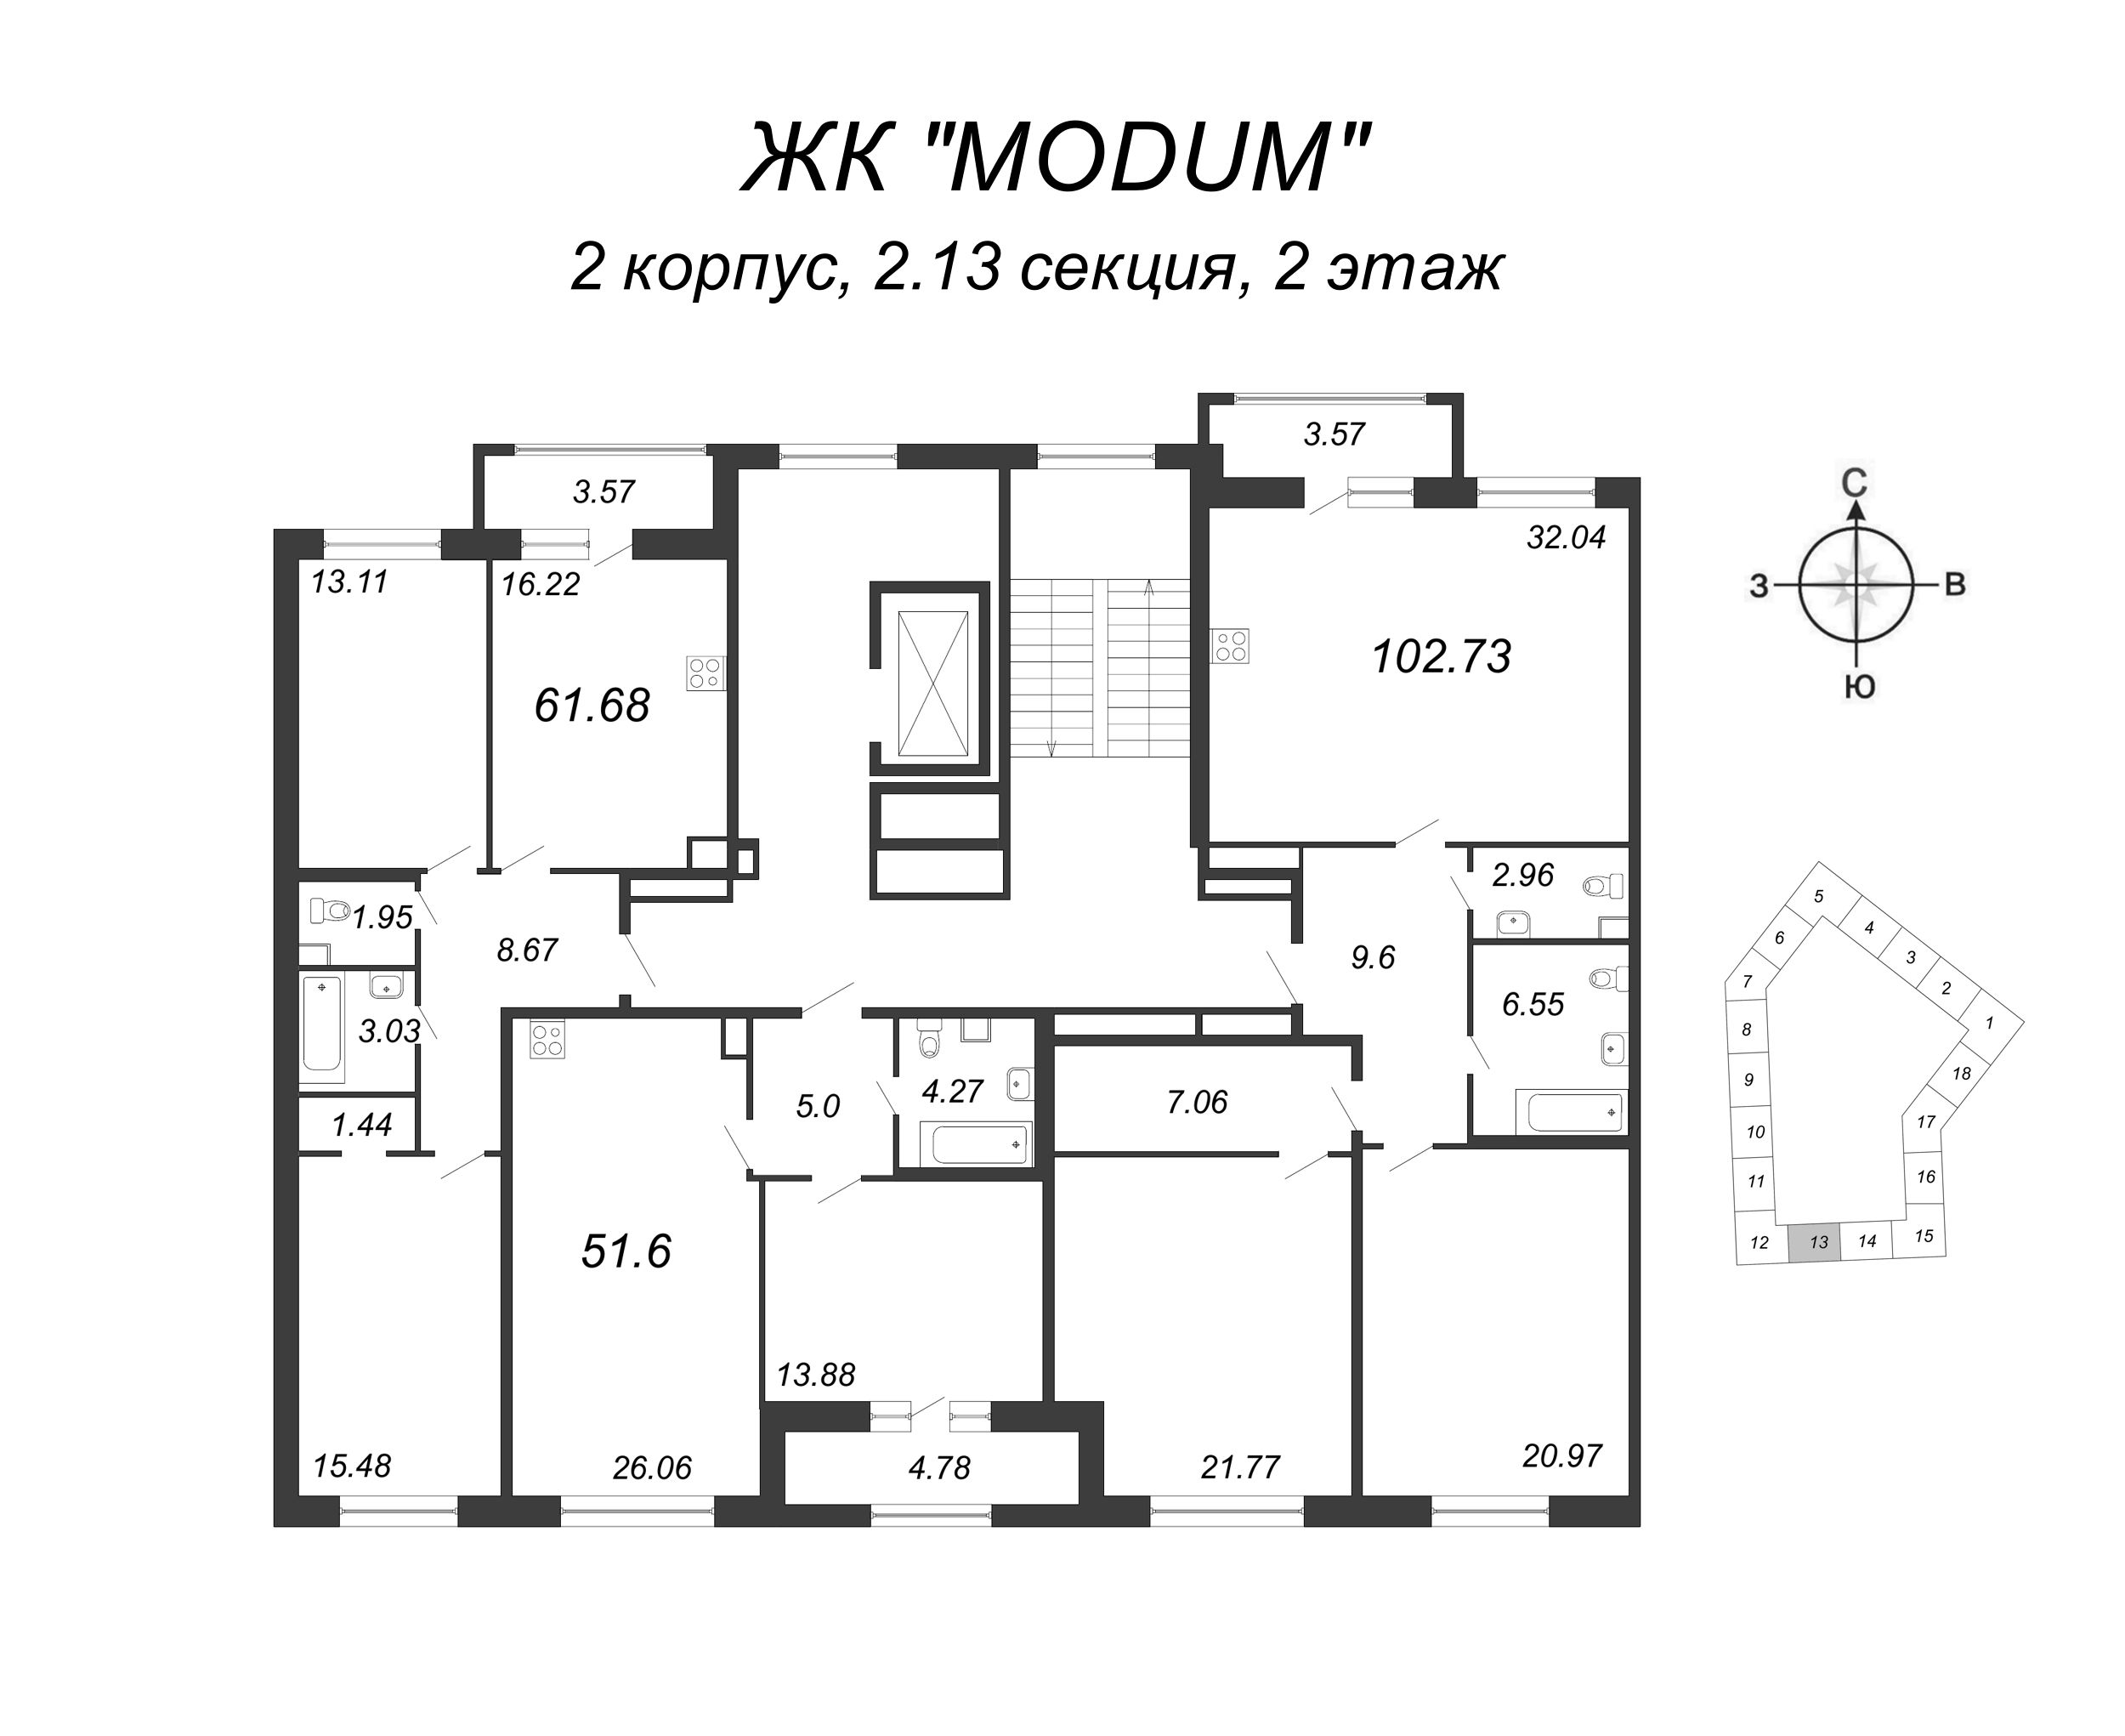 3-комнатная (Евро) квартира, 102.73 м² - планировка этажа